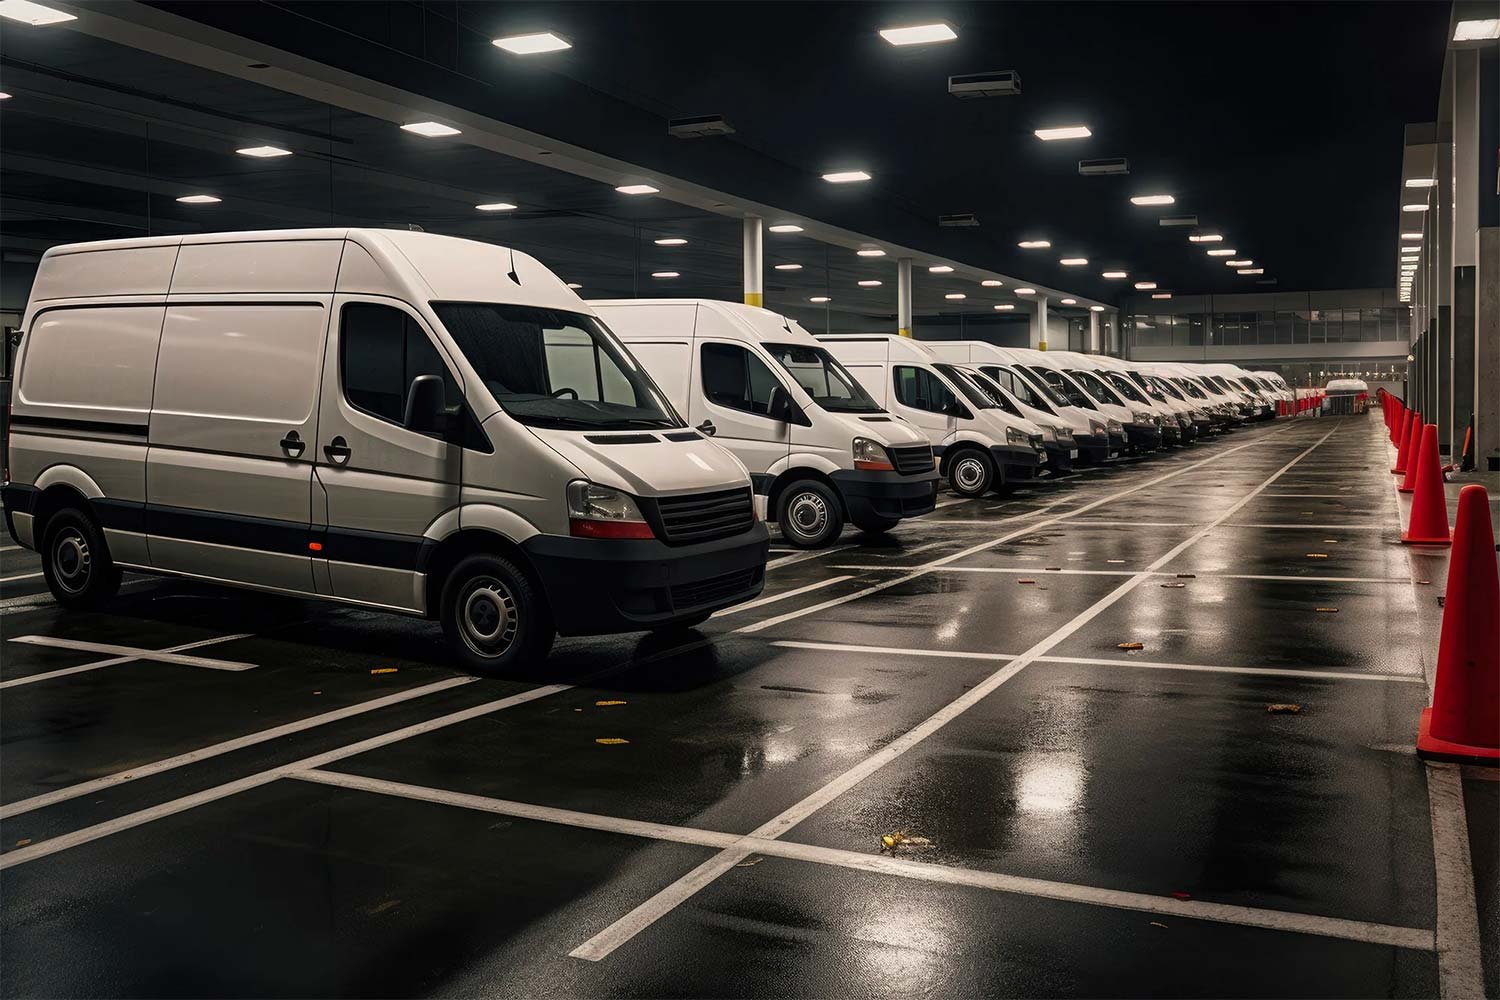 A fleet of parked Sprinter vans, ready to go